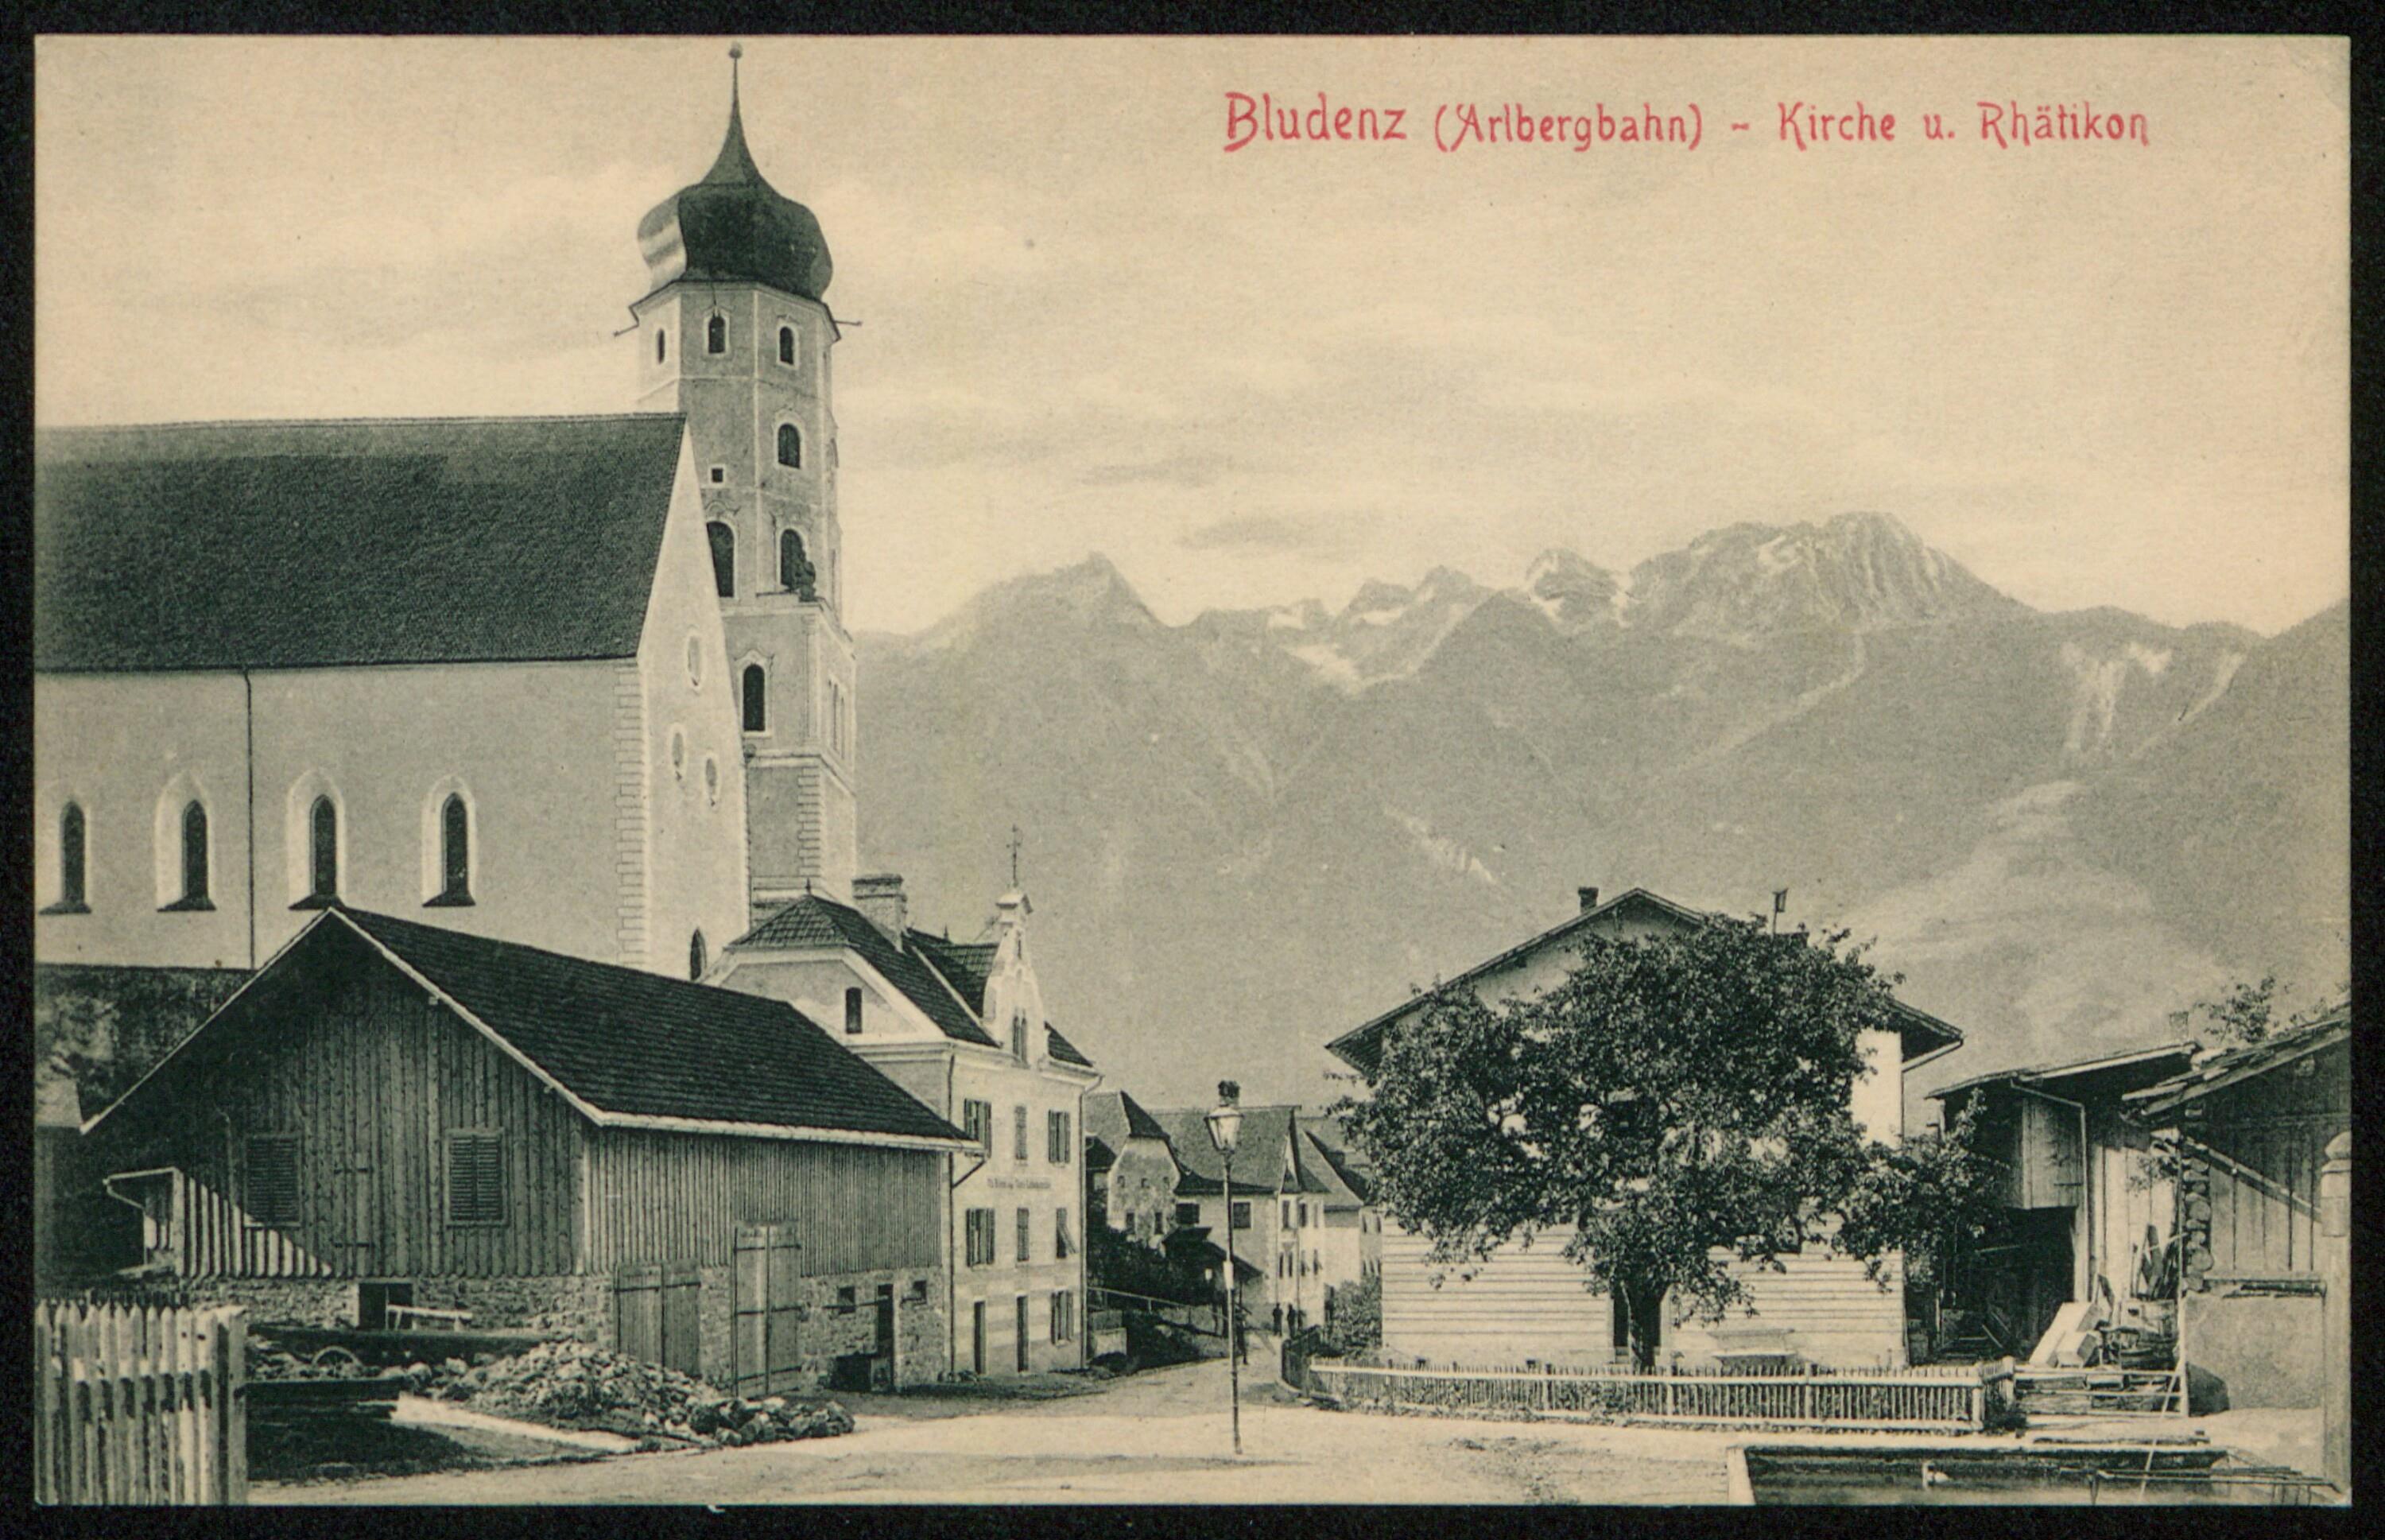 Bludenz (Arlbergbahn) - Kirche u. Rhätikon></div>


    <hr>
    <div class=